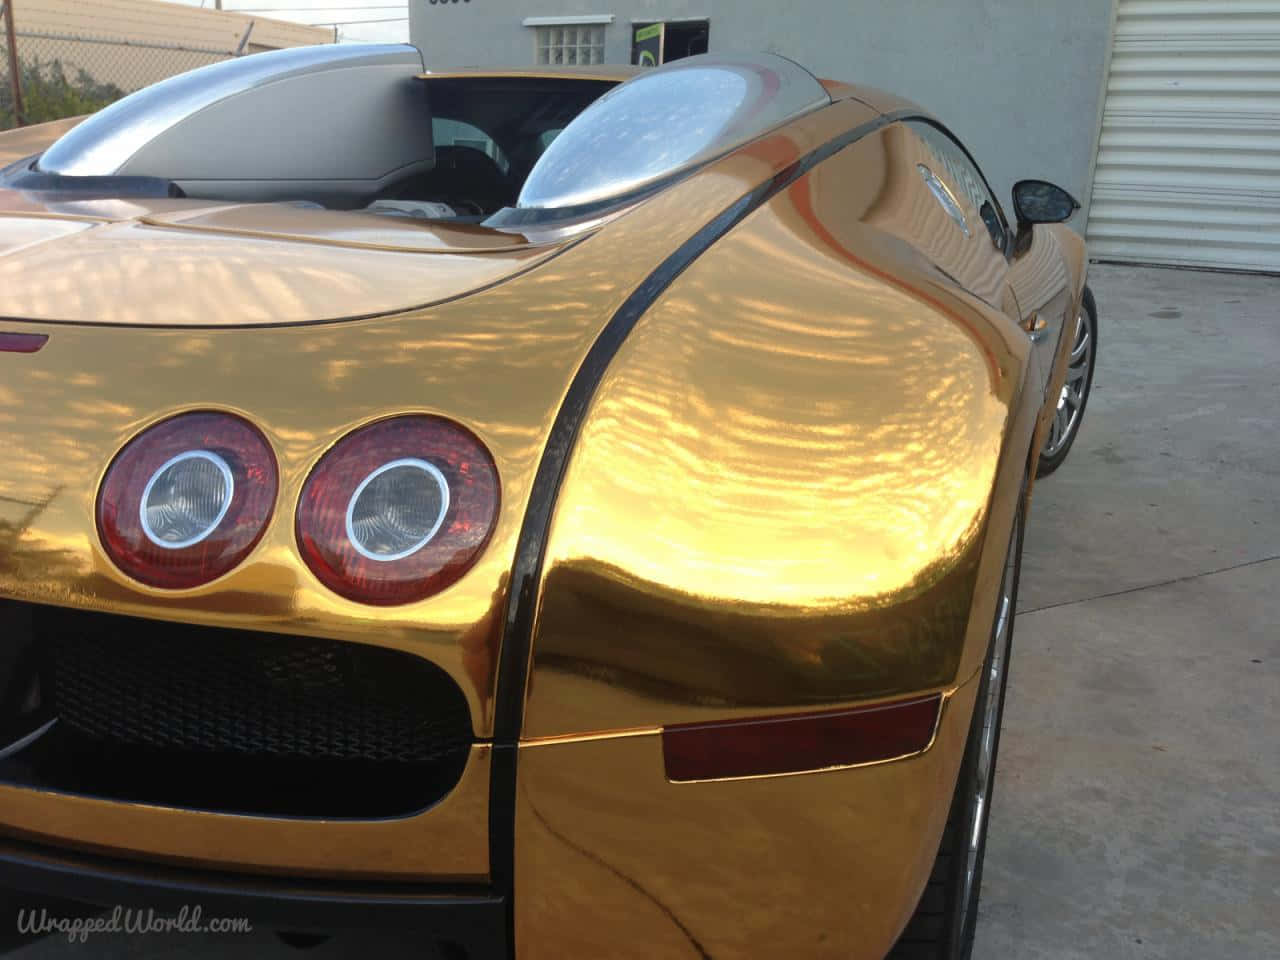 A Gold Bugatti Veyron Parked In A Garage Wallpaper